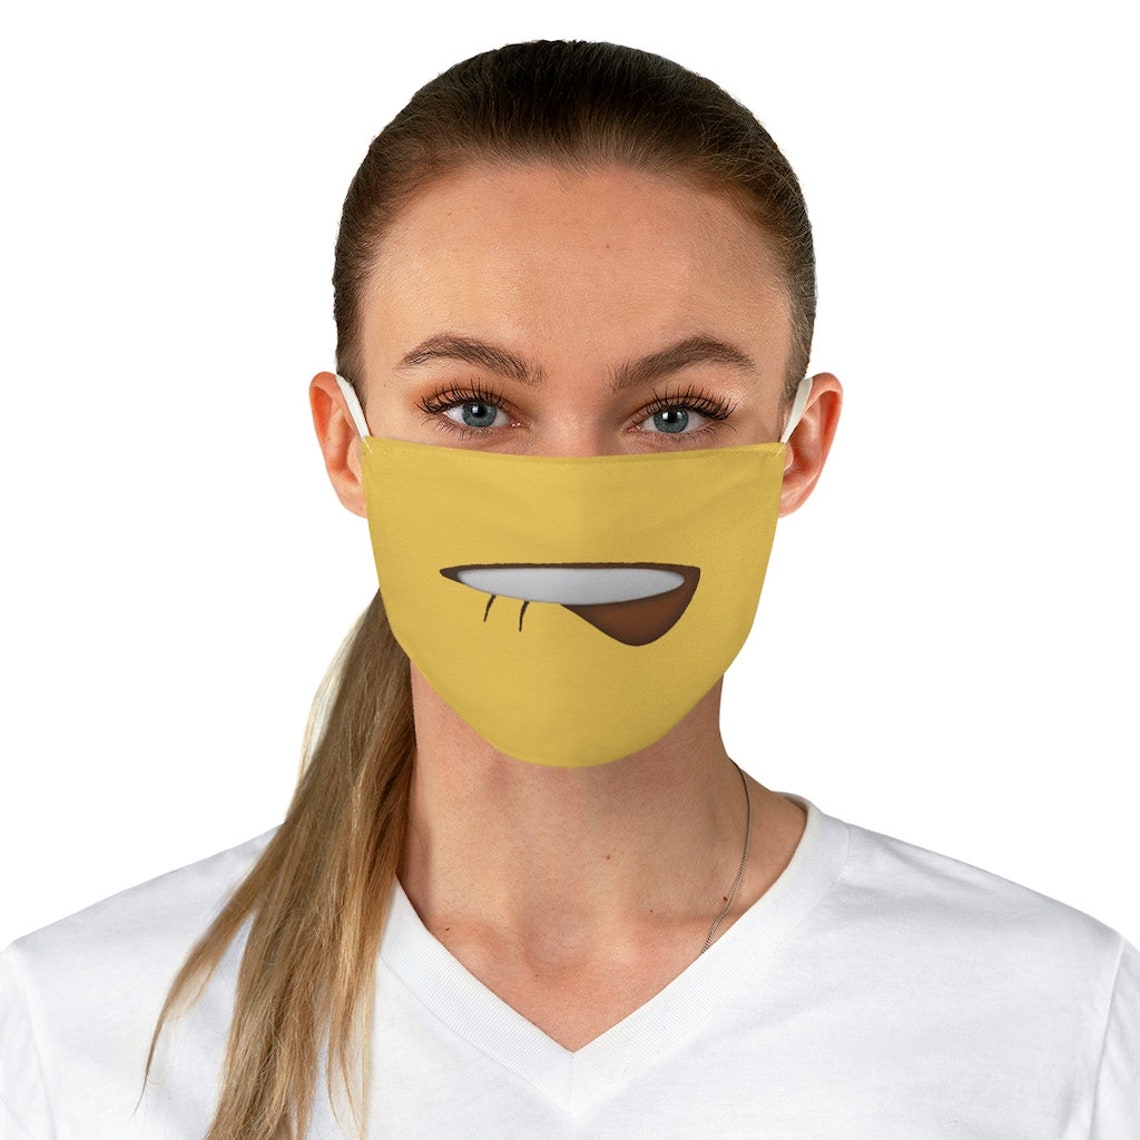 Lip bite emoji face mask | Etsy